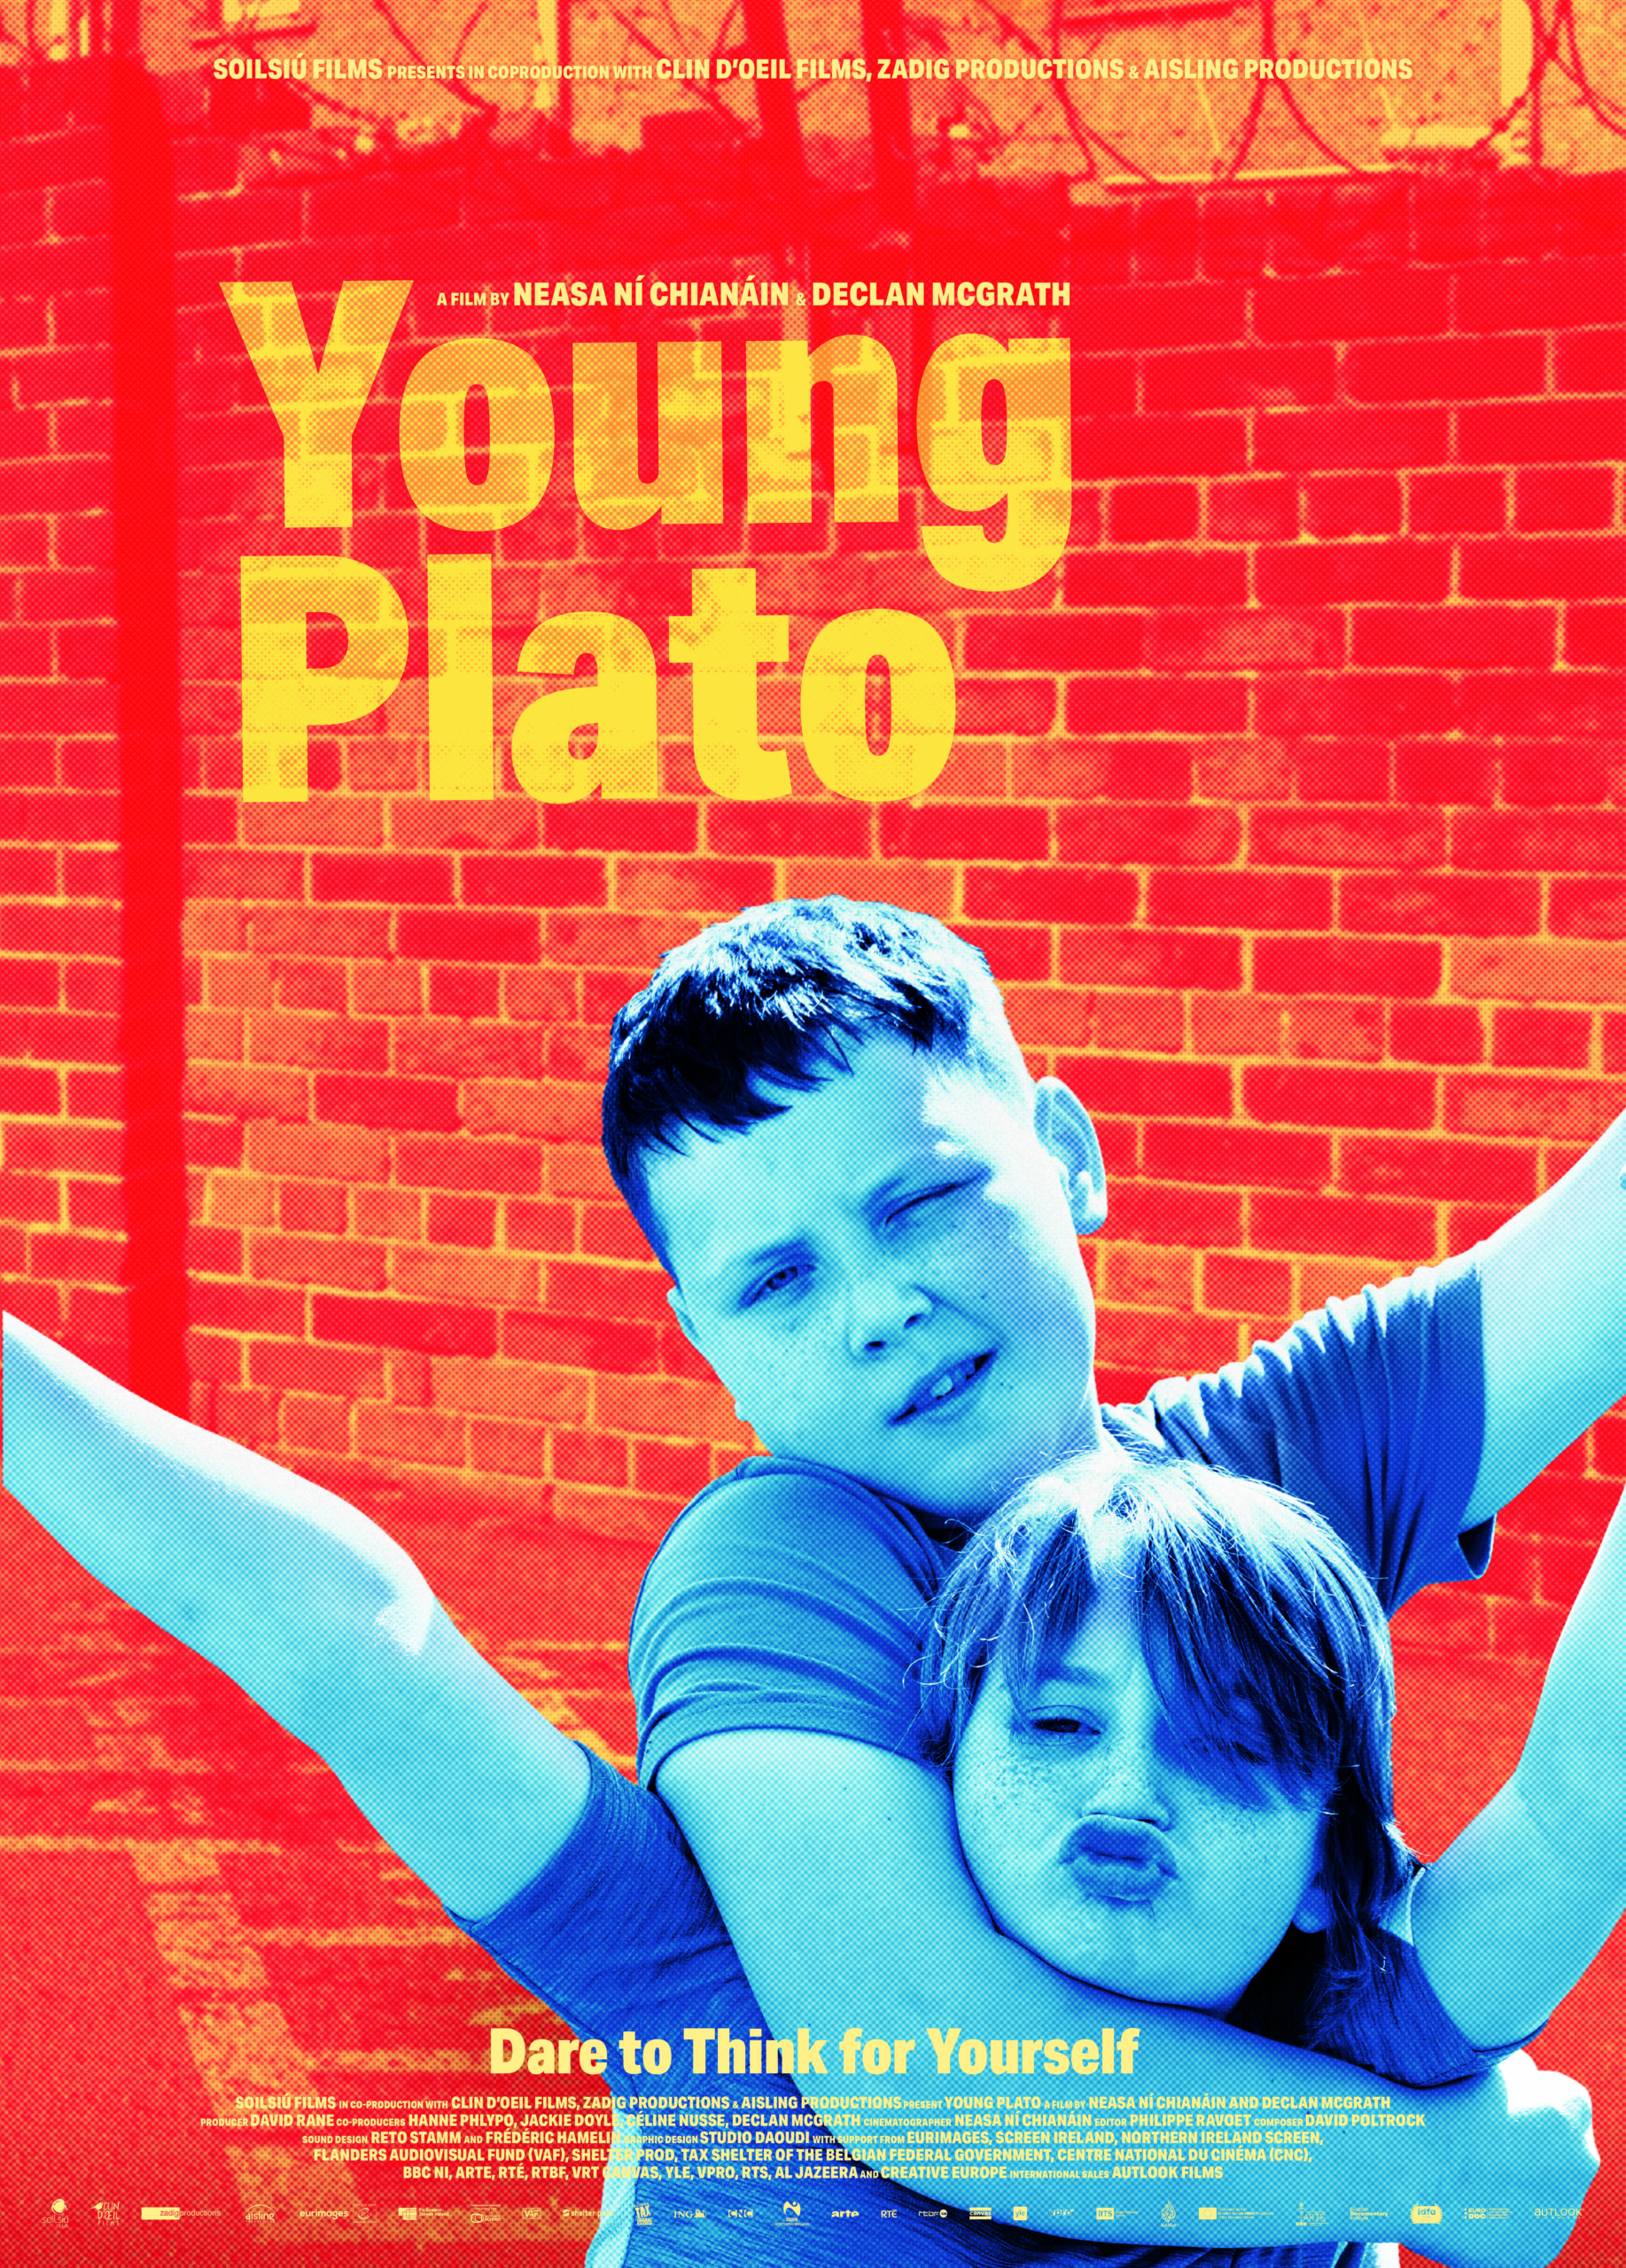 Młody Platon